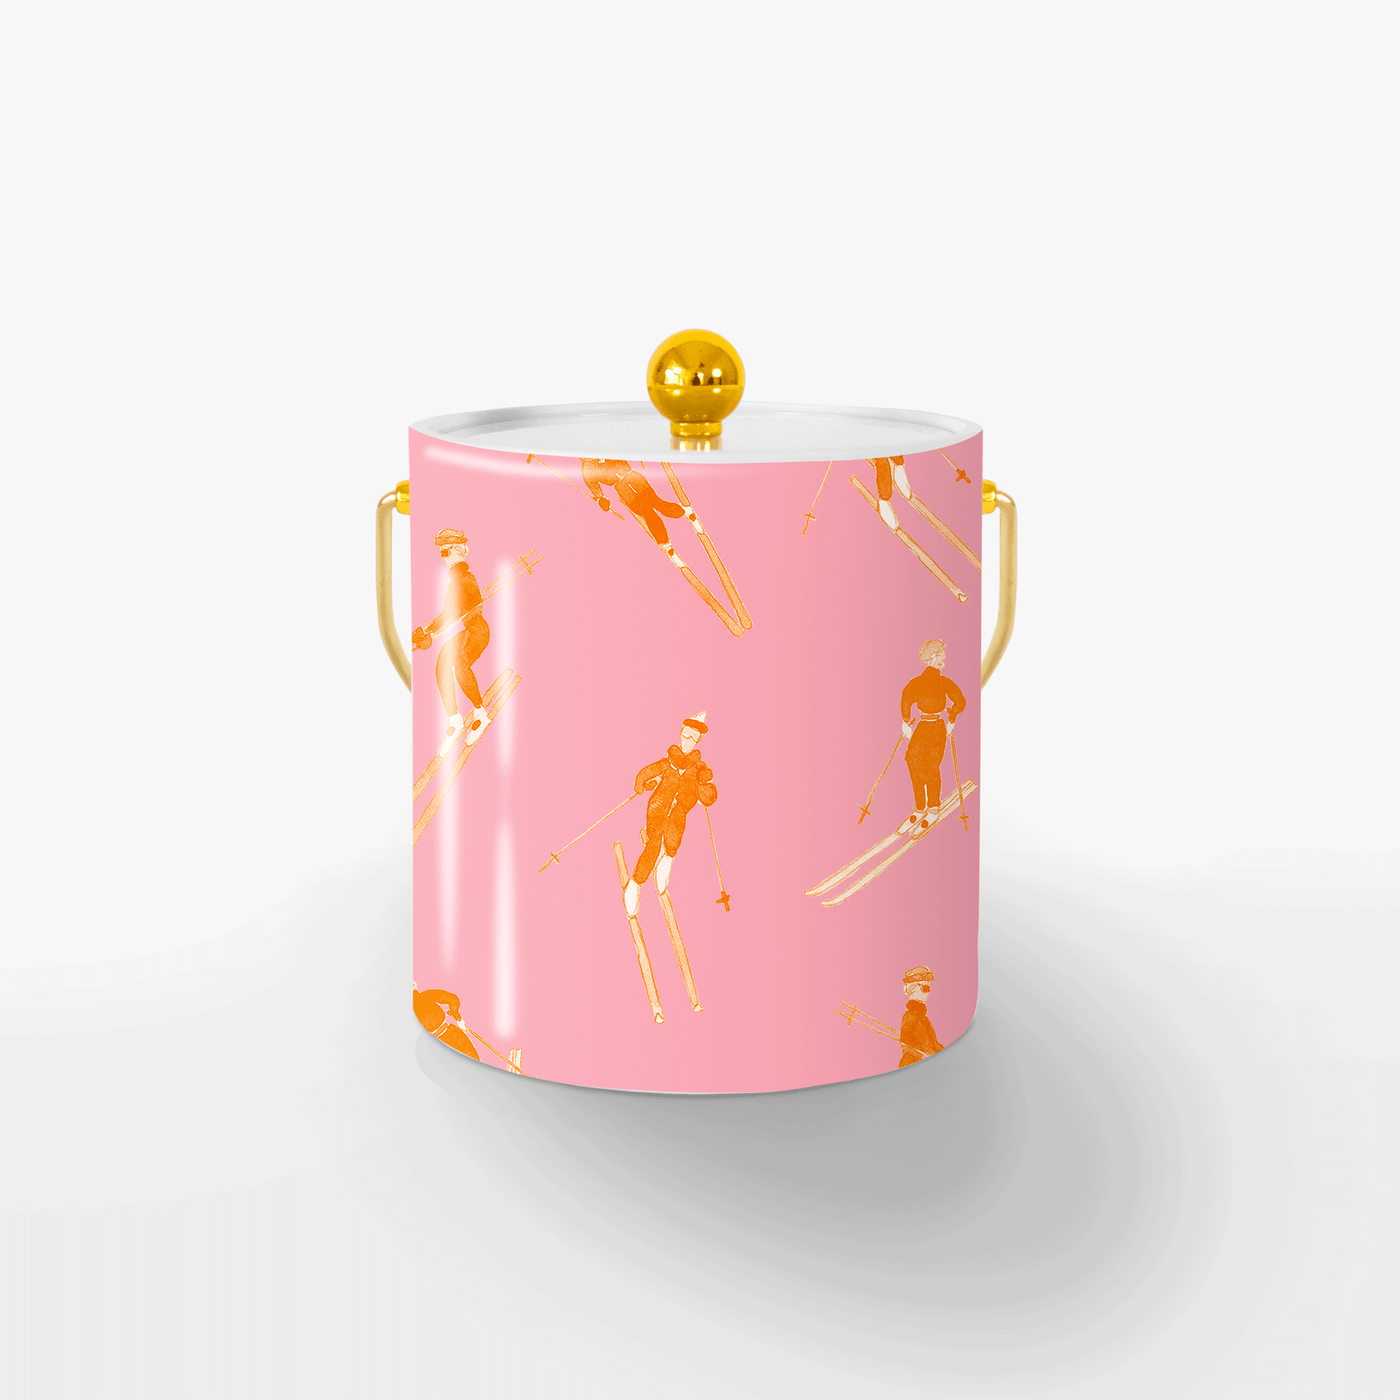 Bluebird Day Ice Bucket Ice Bucket Pink Orange / Gold Katie Kime